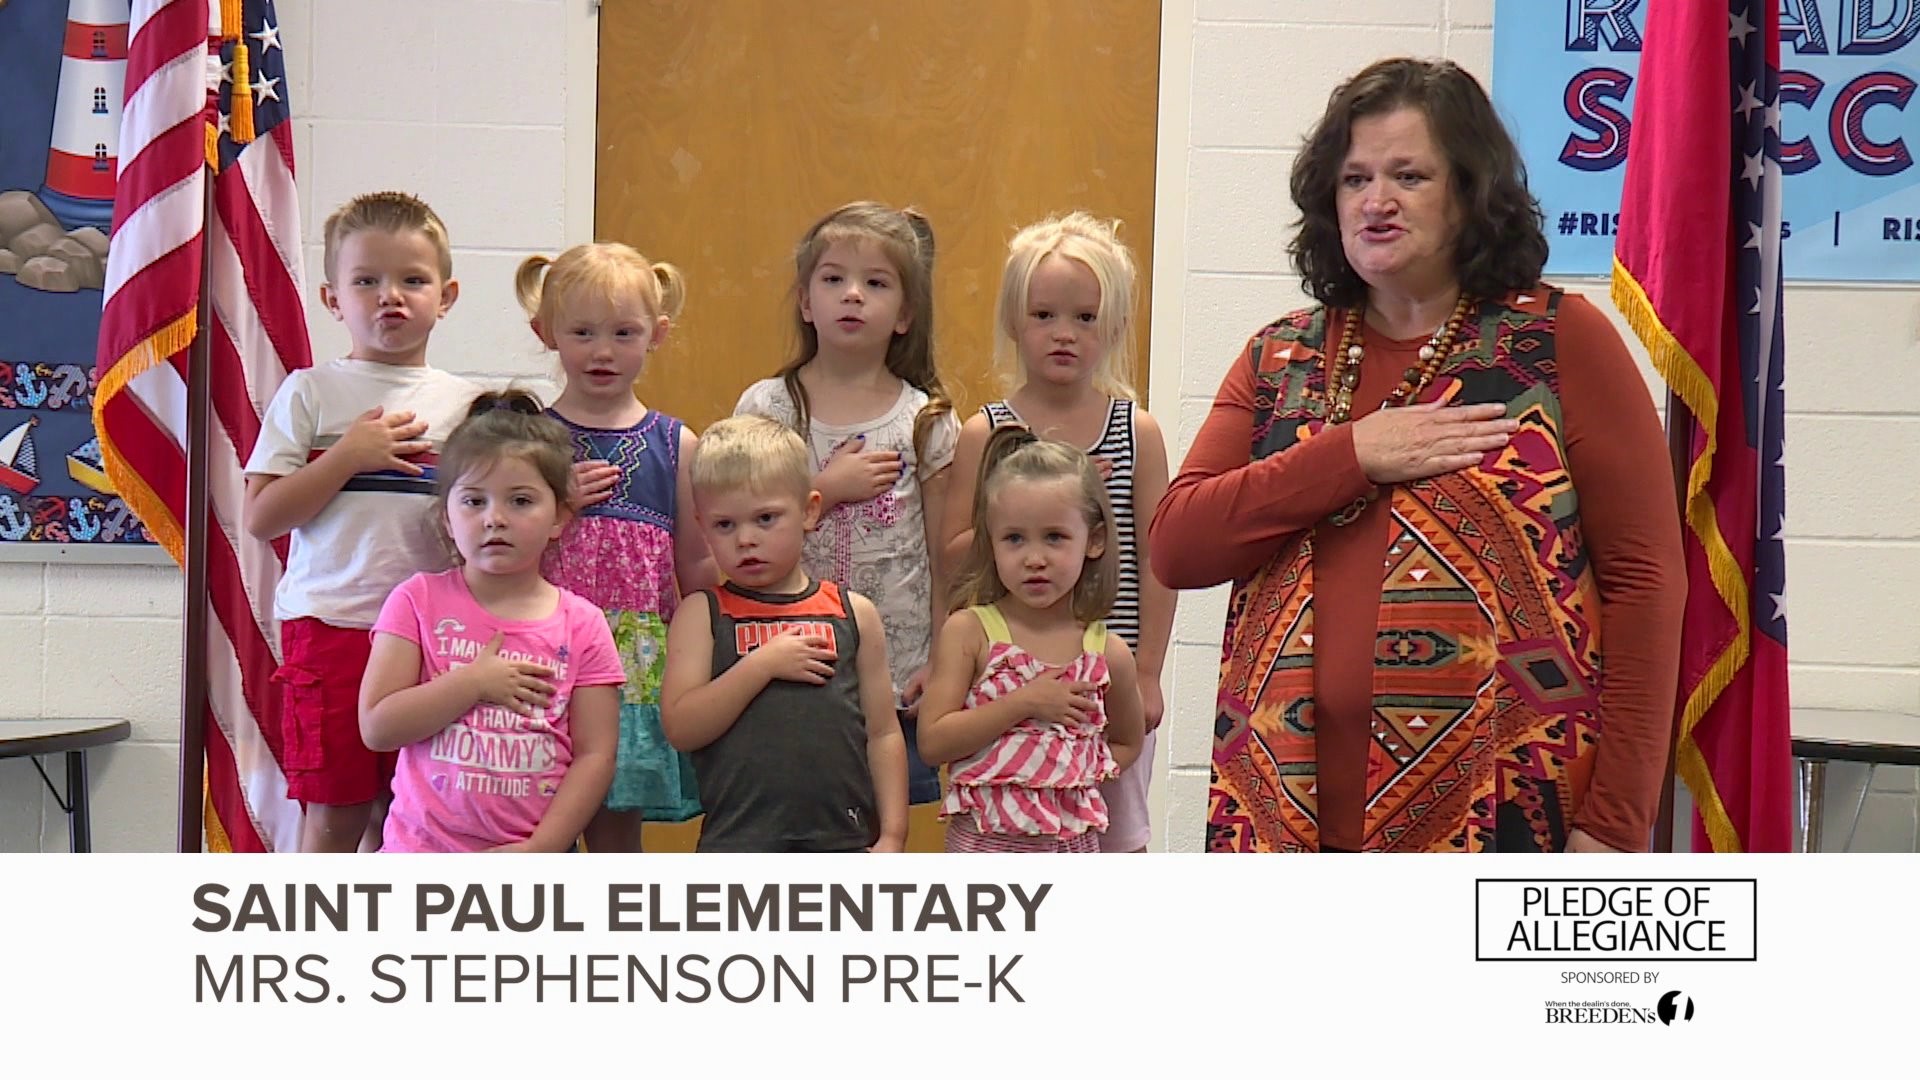 Saint Paul Elementary Mrs. Stephenson Pre-K